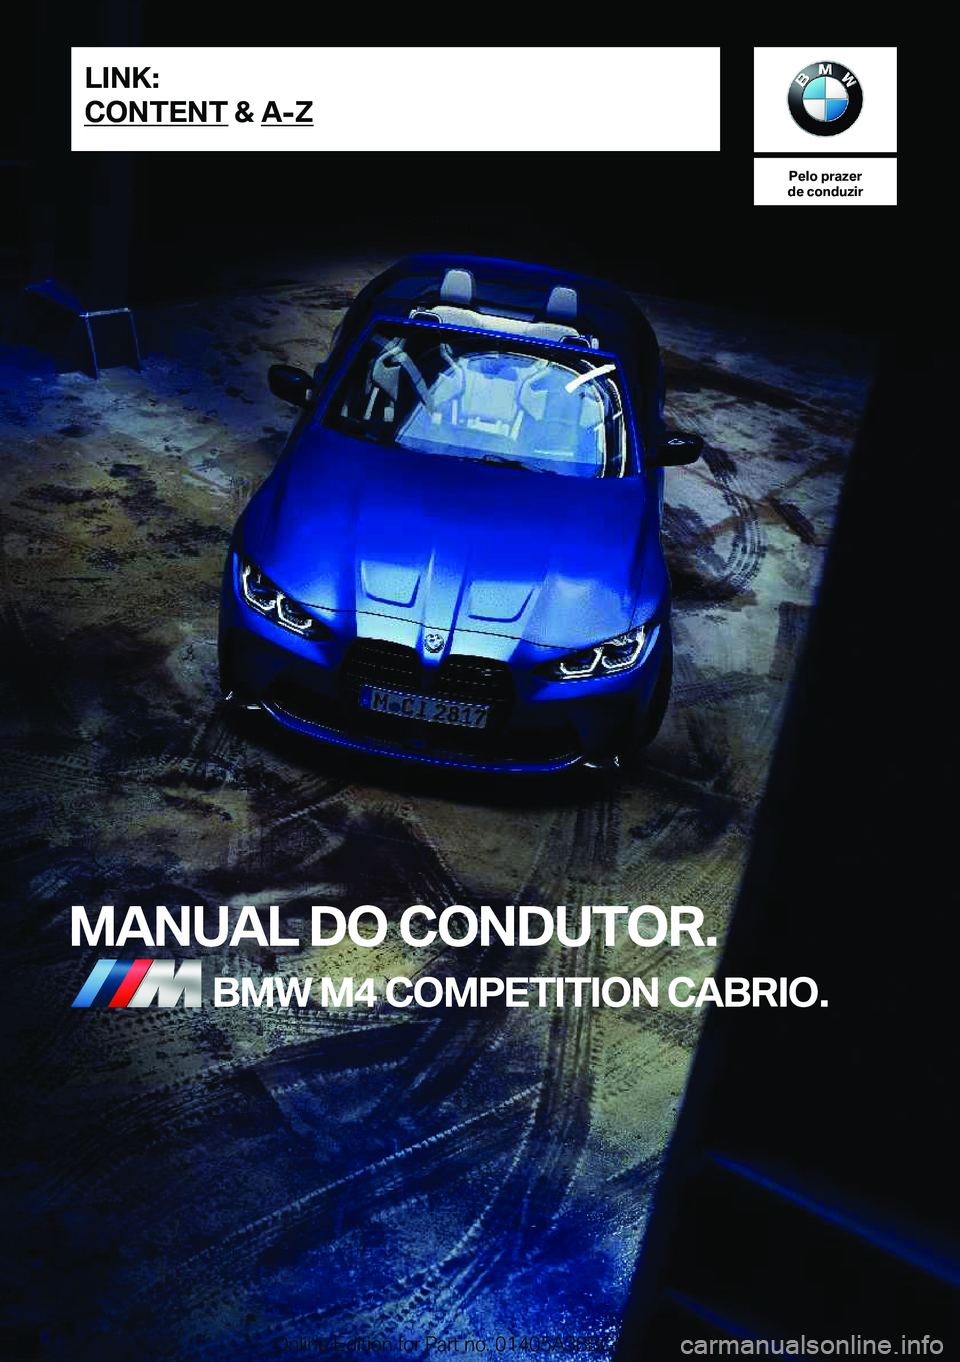 BMW M4 2022  Manual do condutor (in Portuguese) �P�e�l�o��p�r�a�z�e�r
�d�e��c�o�n�d�u�z�i�r
�M�A�N�U�A�L��D�O��C�O�N�D�U�T�O�R�.�B�M�W��M�4��C�O�M�P�E�T�I�T�I�O�N��C�A�B�R�I�O�.�L�I�N�K�:
�C�O�N�T�E�N�T��&��A�-�Z�O�n�l�i�n�e��E�d�i�t�i�o�